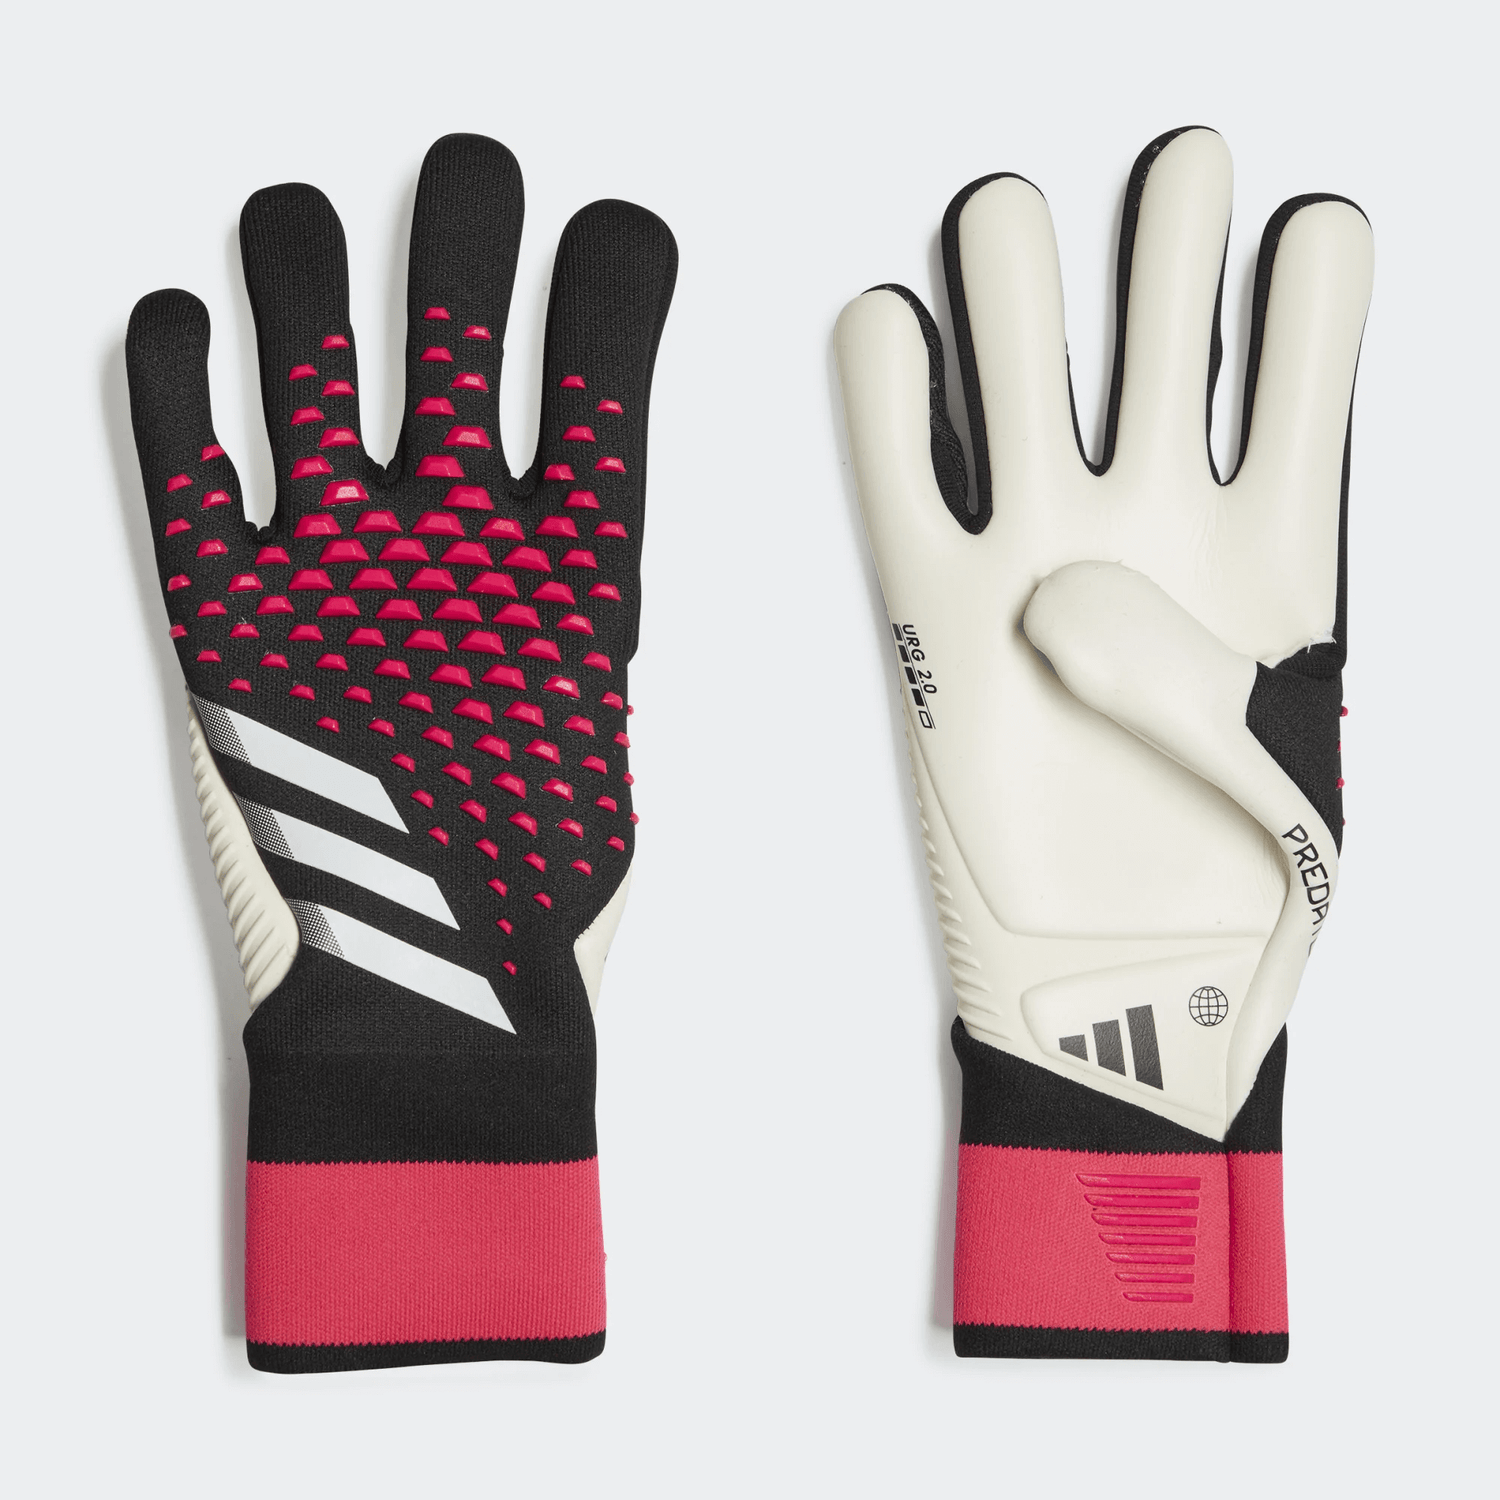 adidas Predator Pro Goalkeeper Gloves - Black-White-Pink (Pair)